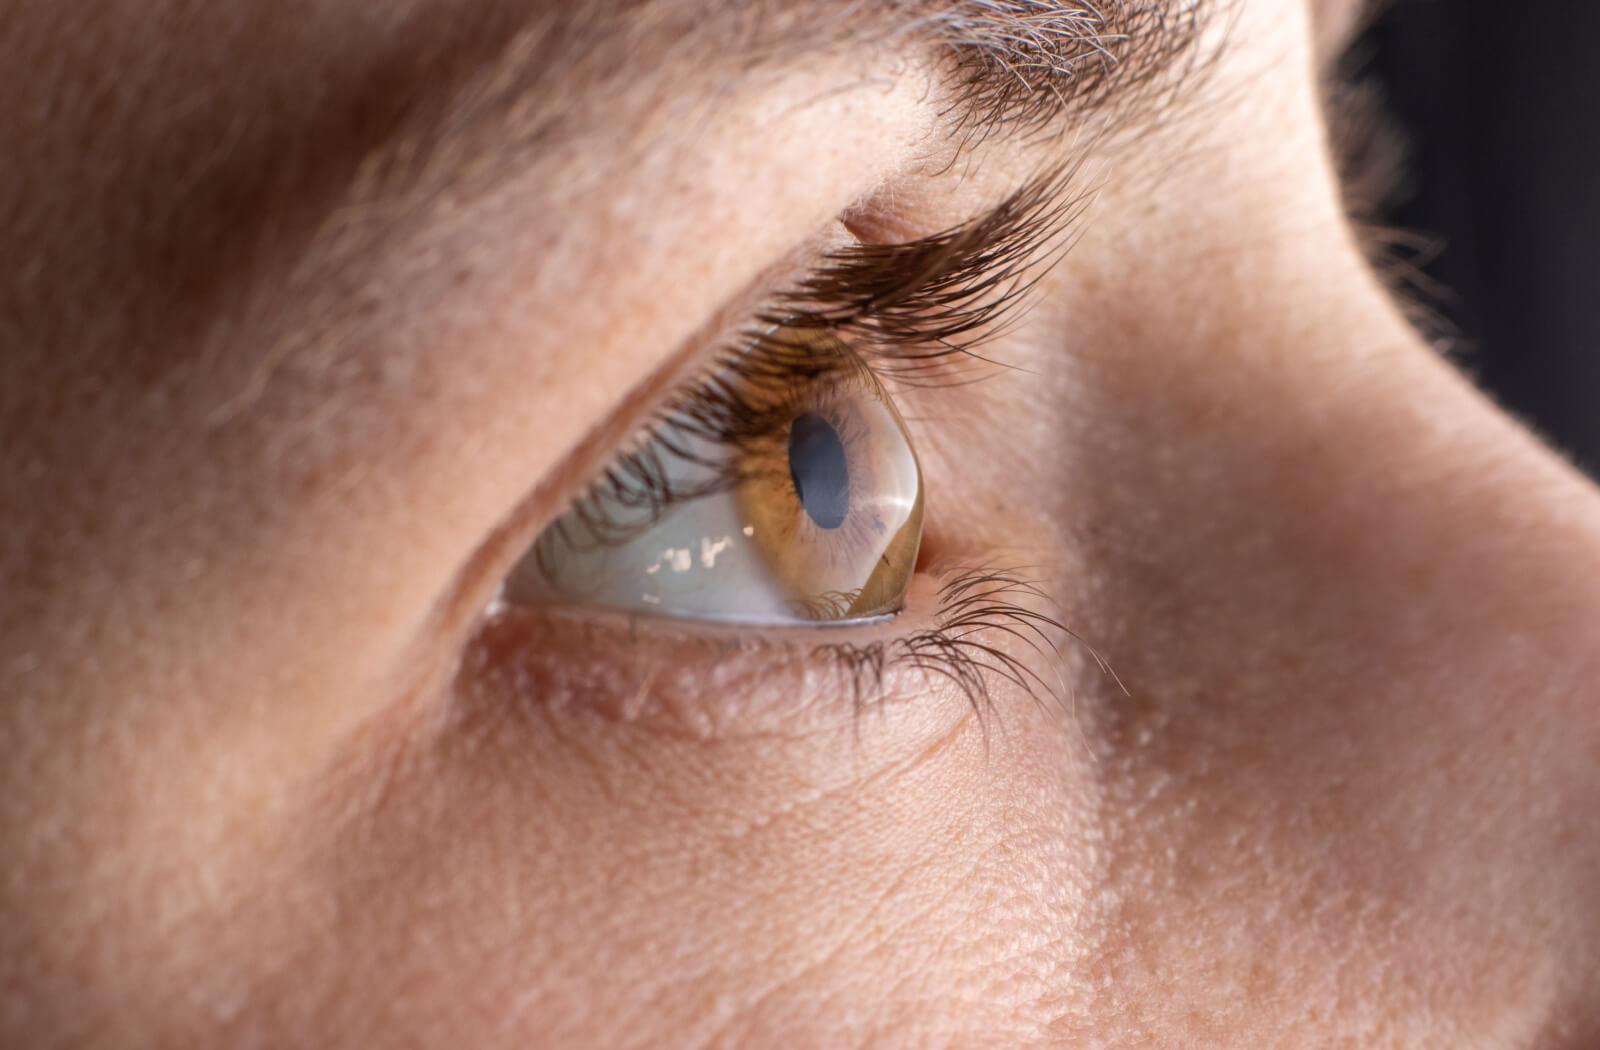 A close-up of an eye showing a cone shape cornea.